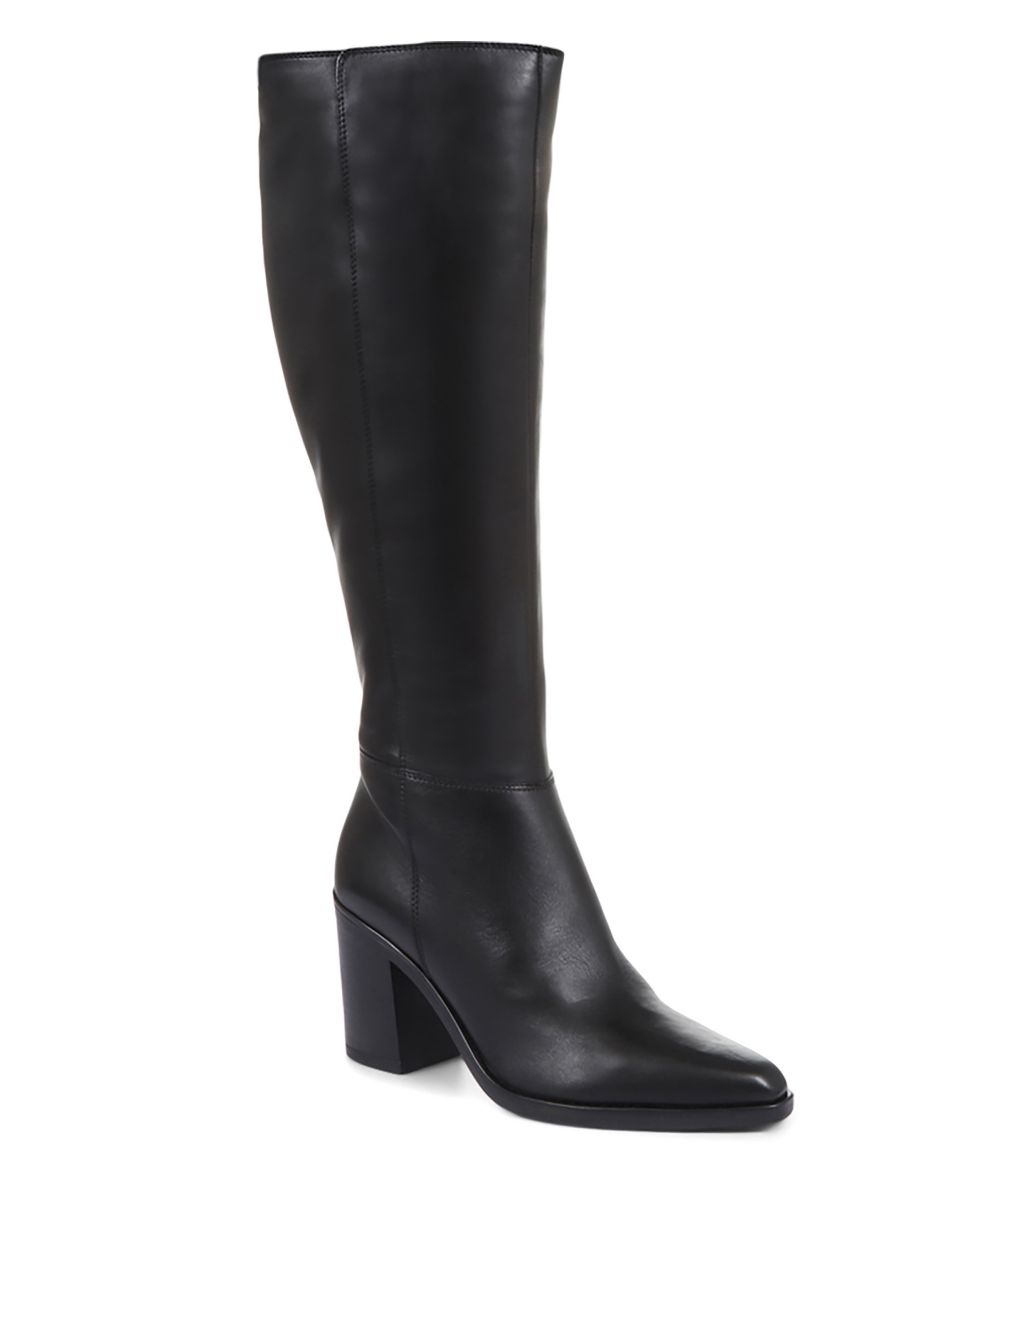 Regular Calf Leather Block Heel Pointed Knee High Boots image 2